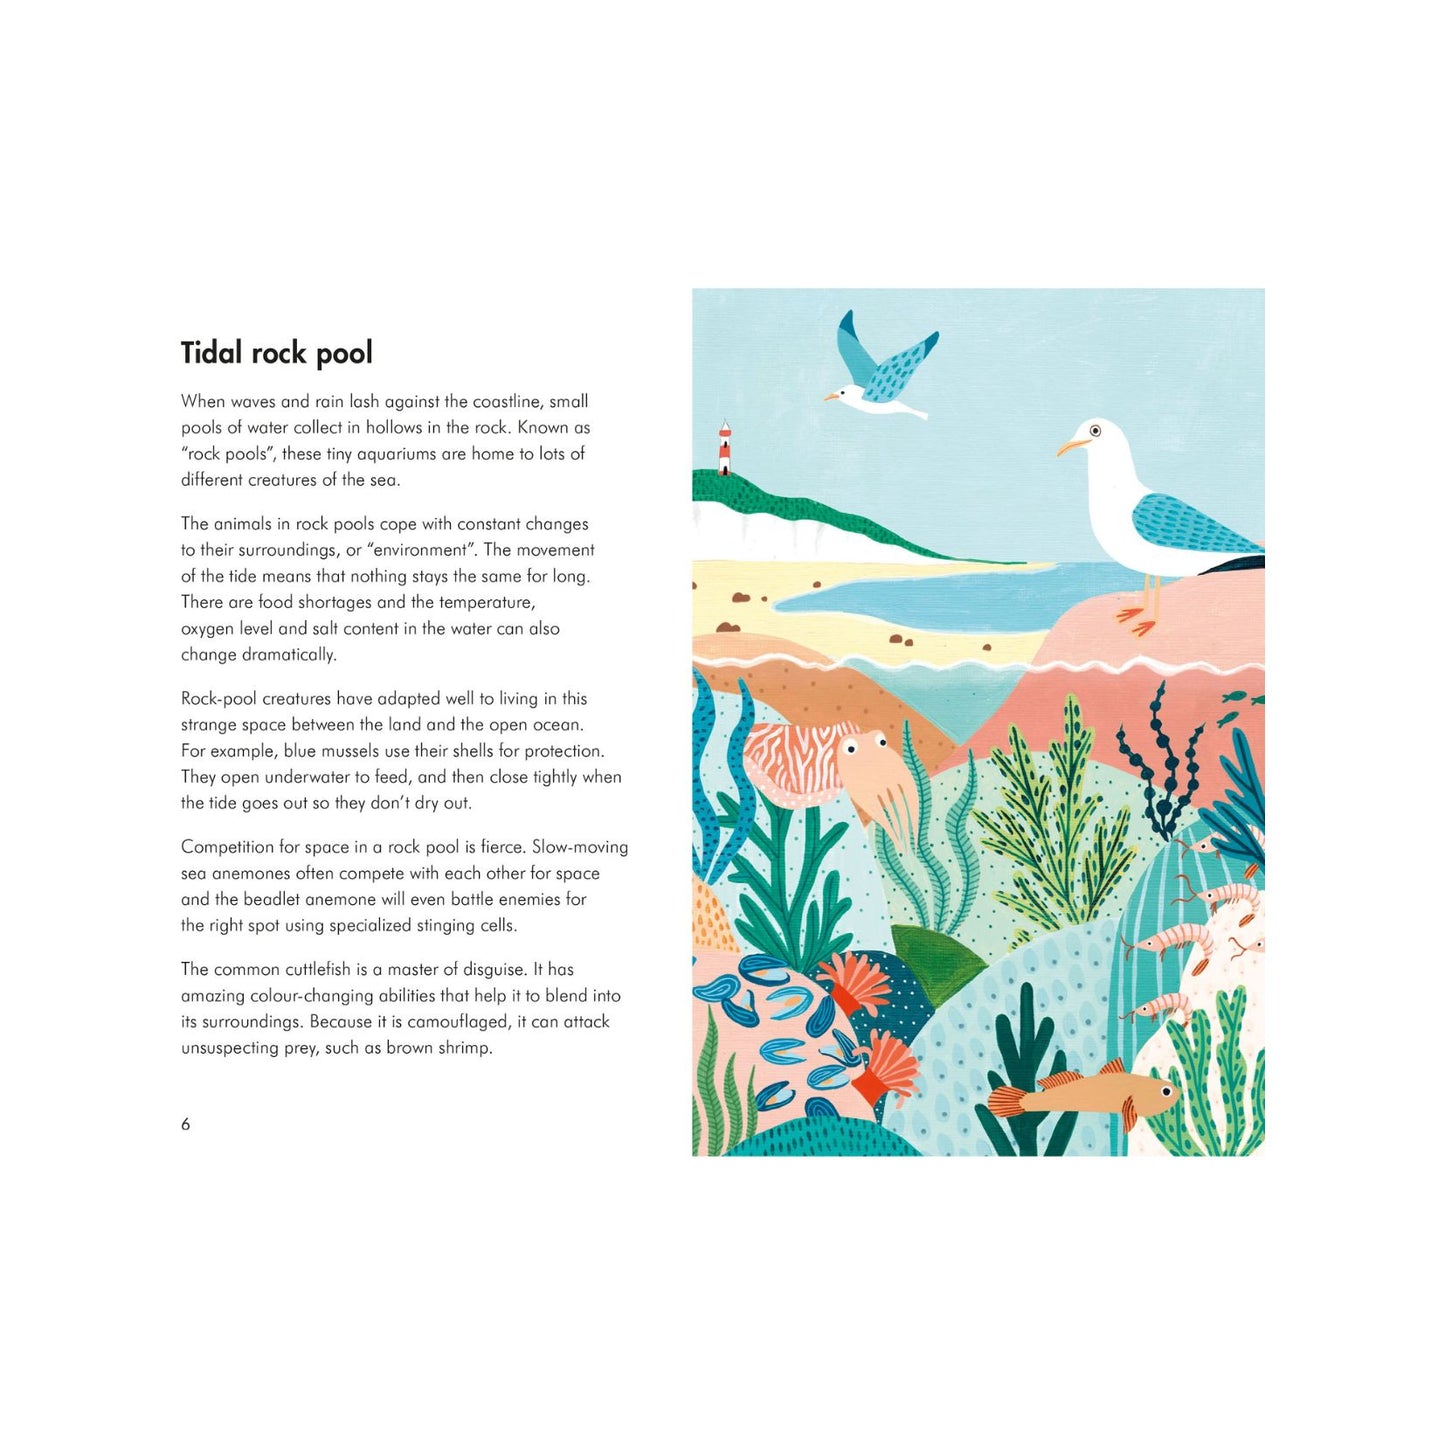 SEA CREATURES: A LADYBIRD BOOK